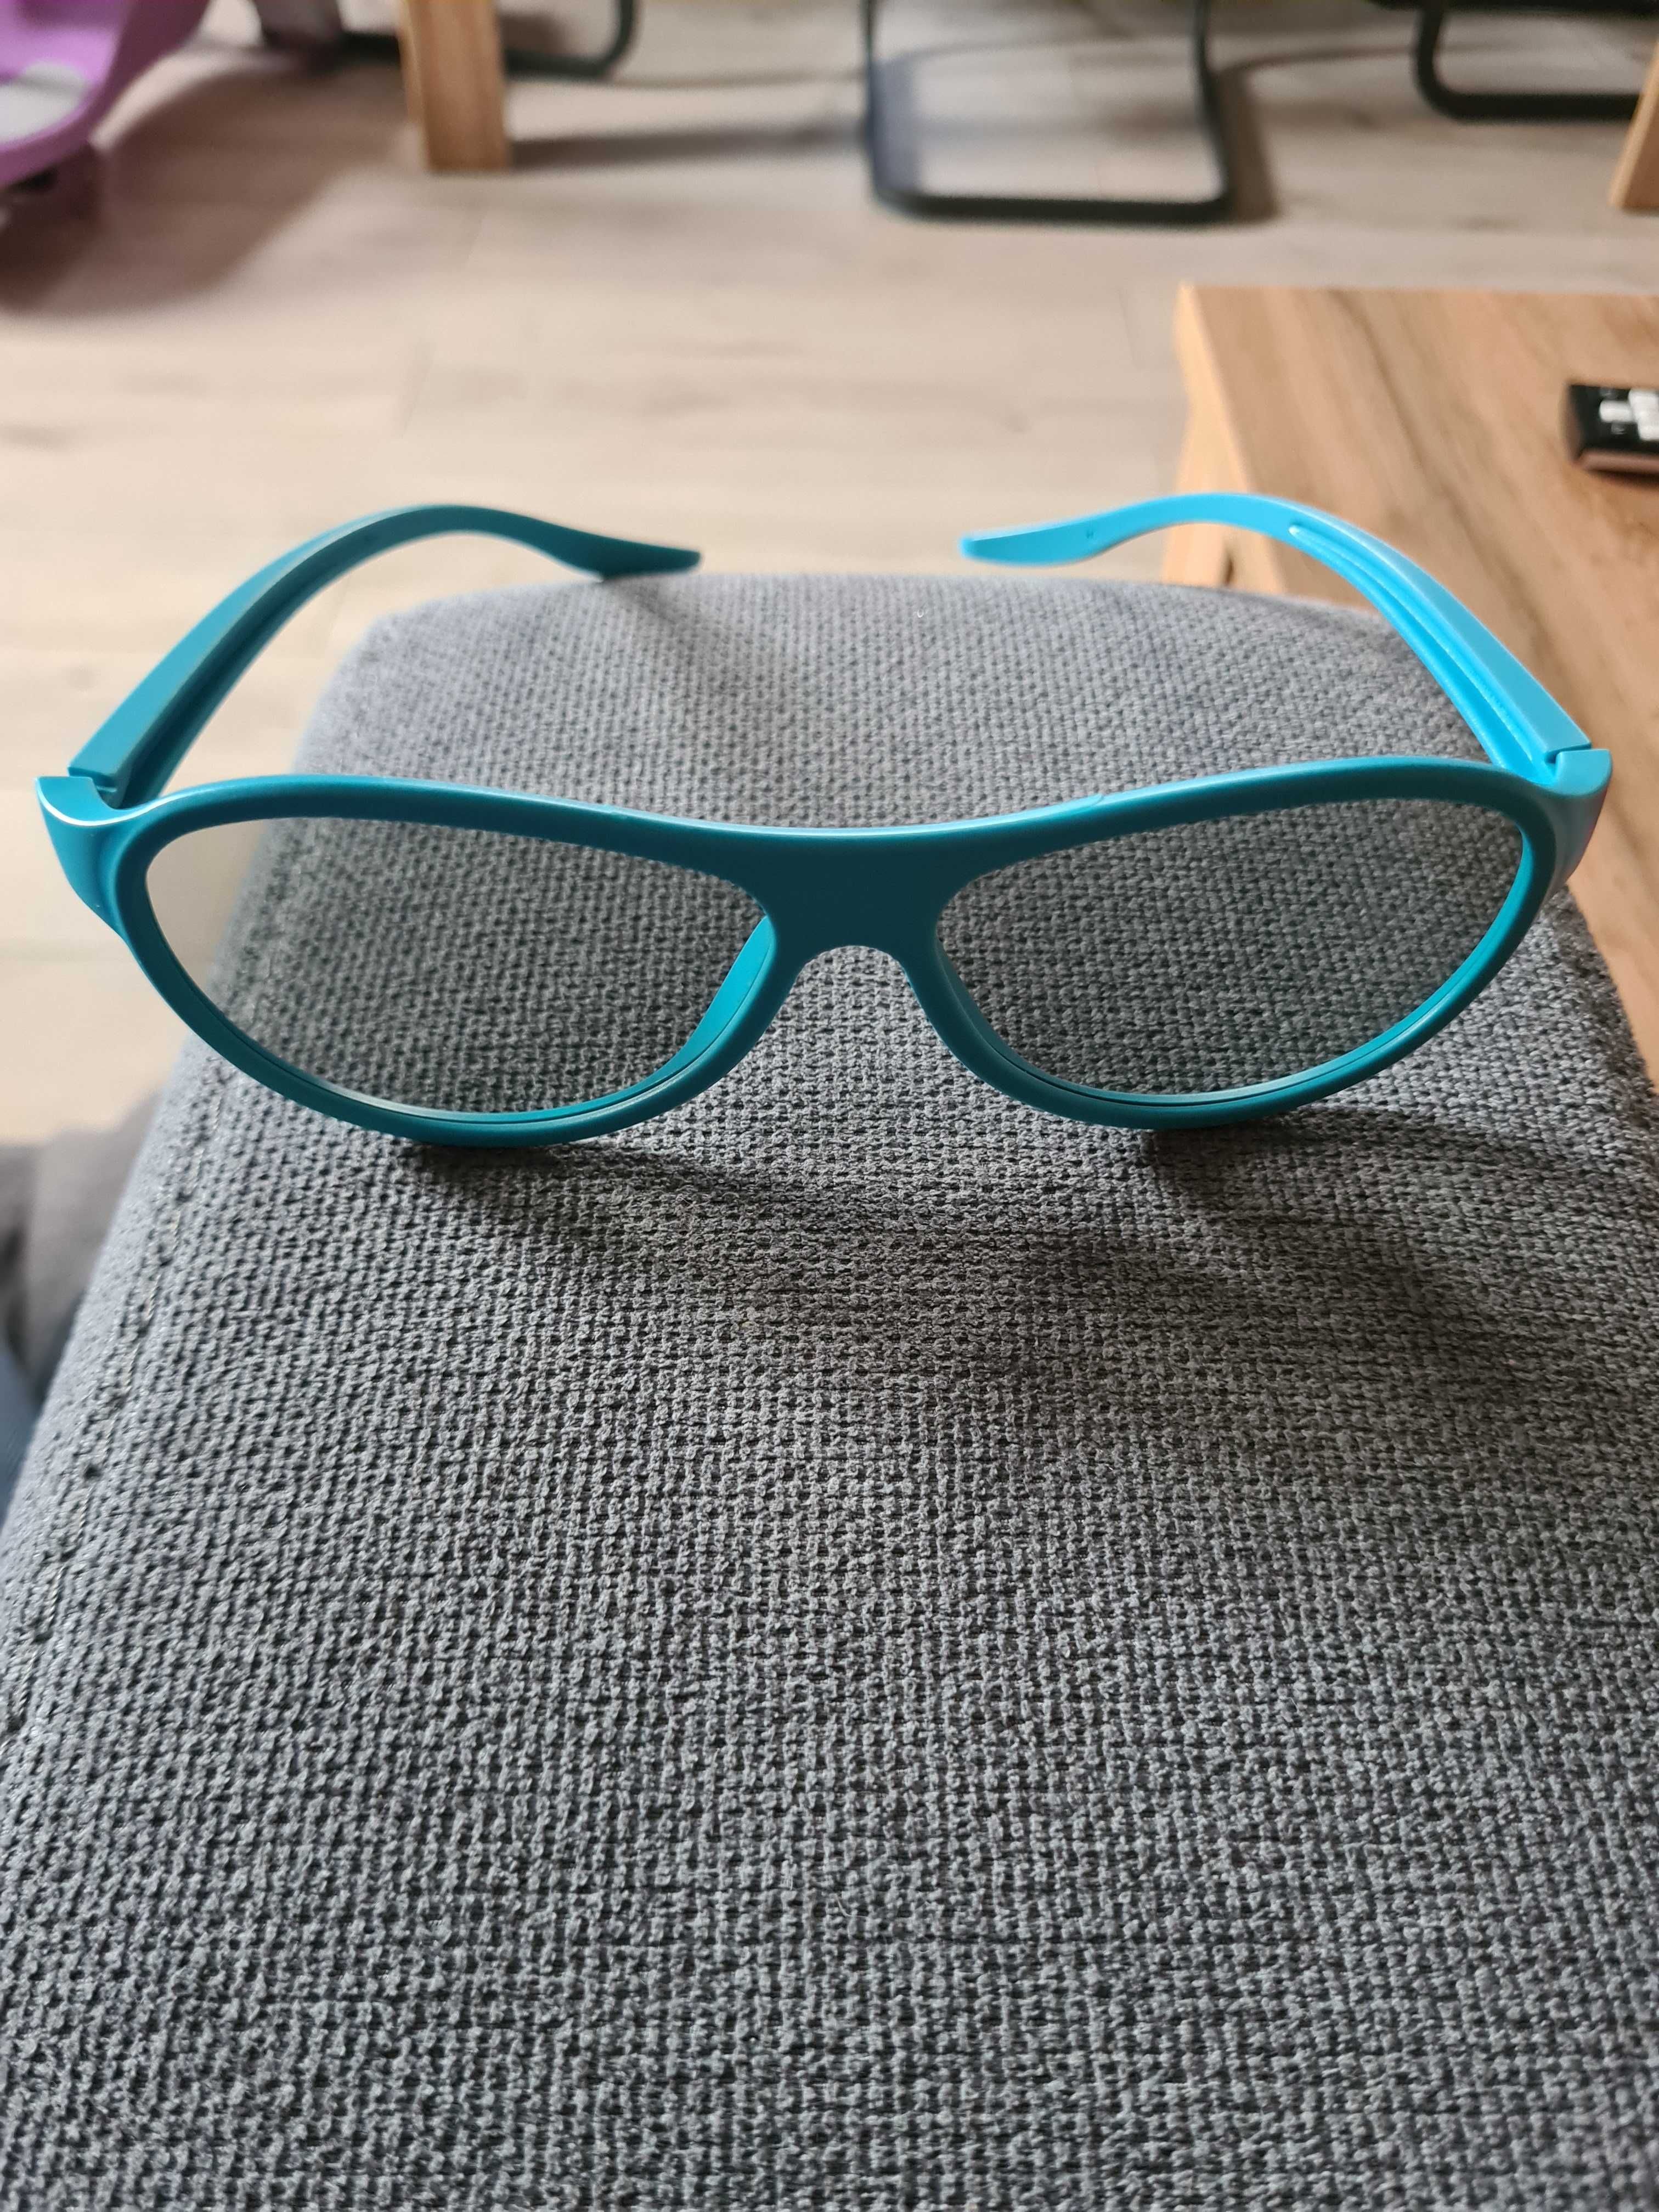 LG okulary 3D CINEMA